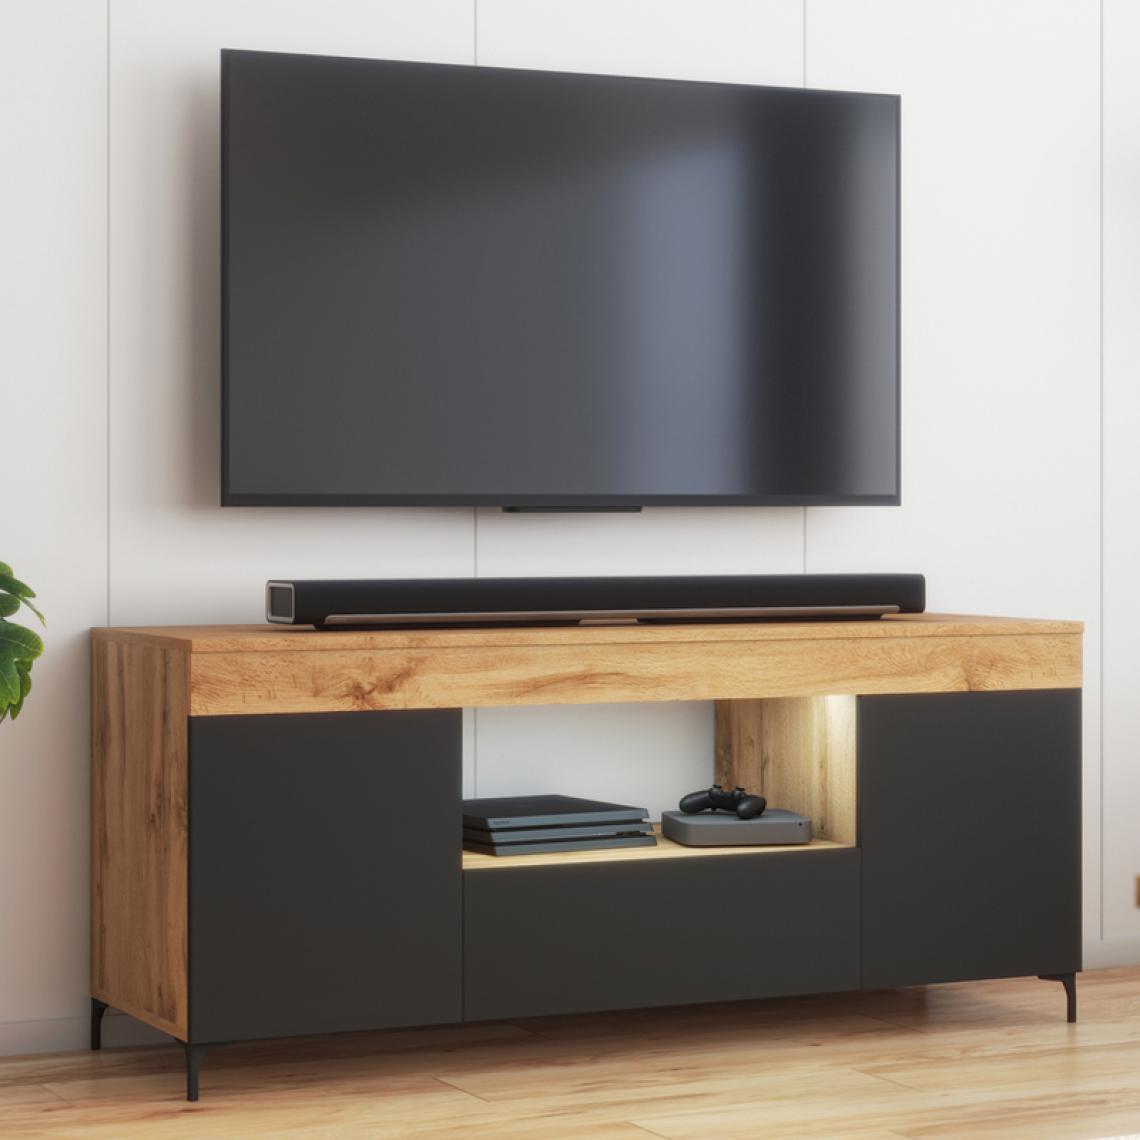 Selsey - Meuble tv avec LED - GUSTO - 137 cm - lancaster / noir mat - style contemporain - Meubles TV, Hi-Fi